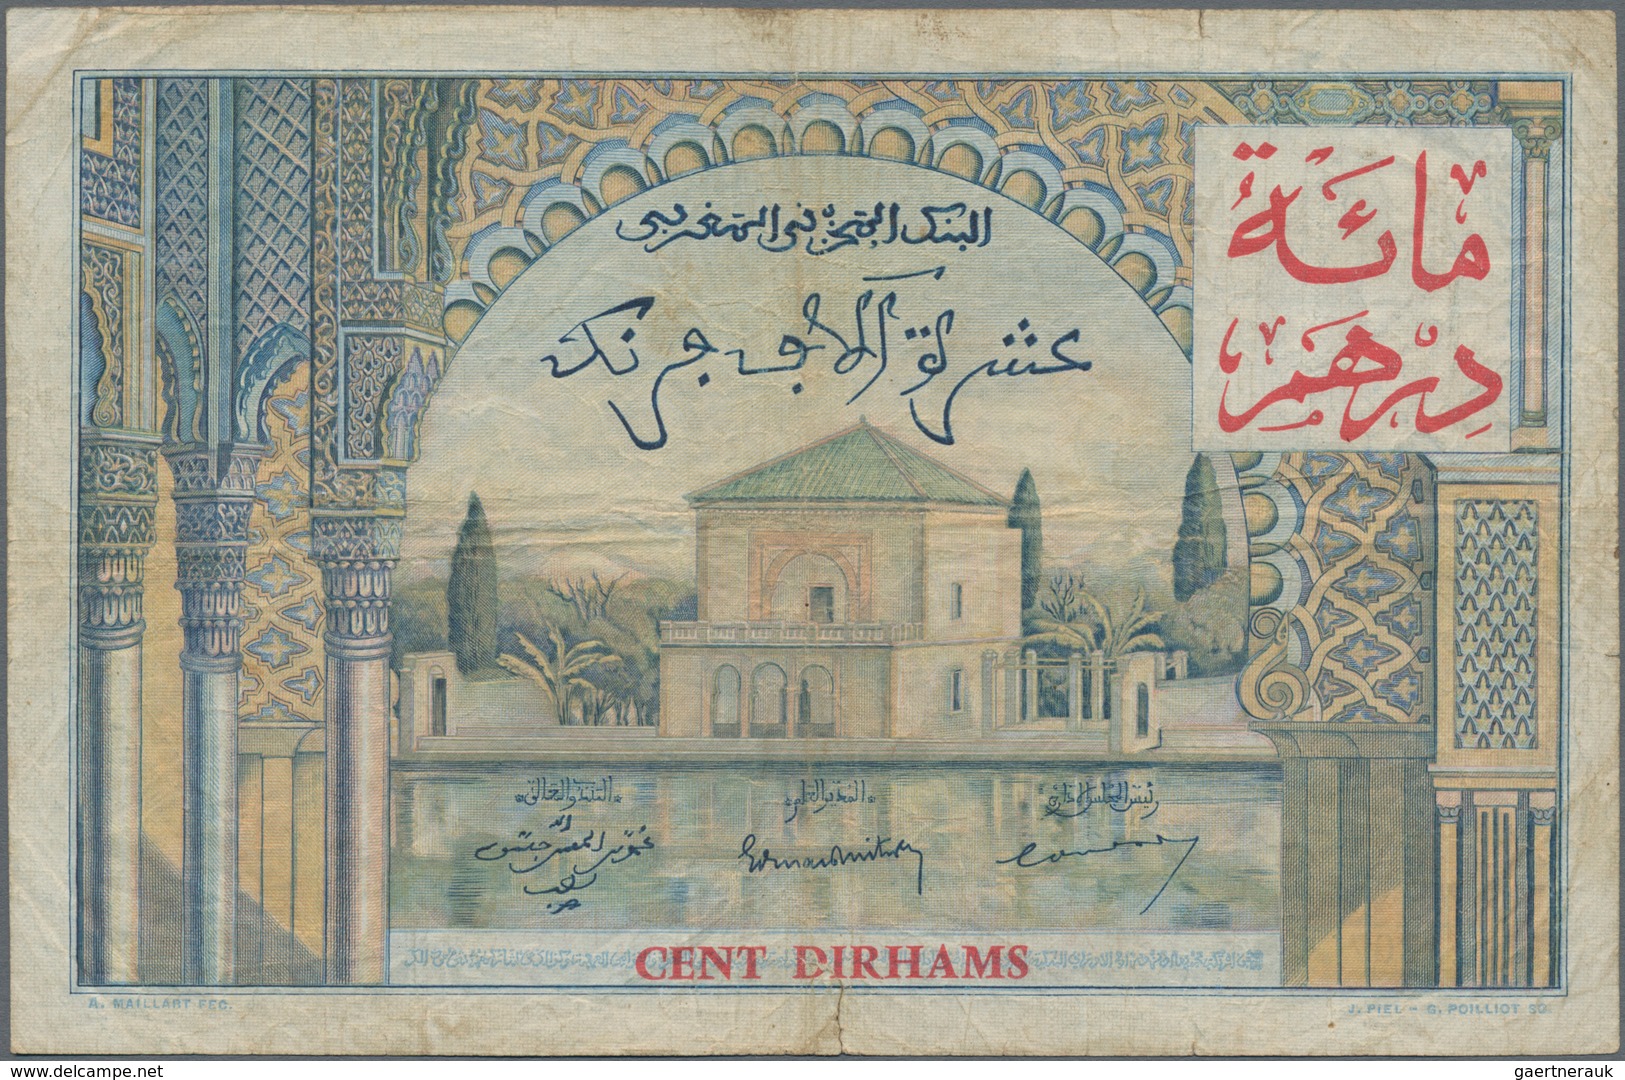 Morocco / Marokko: Banque D'État Du Maroc 100 Dirhams On 10.000 Francs 1955 (1959), P.52, Small Marg - Marruecos